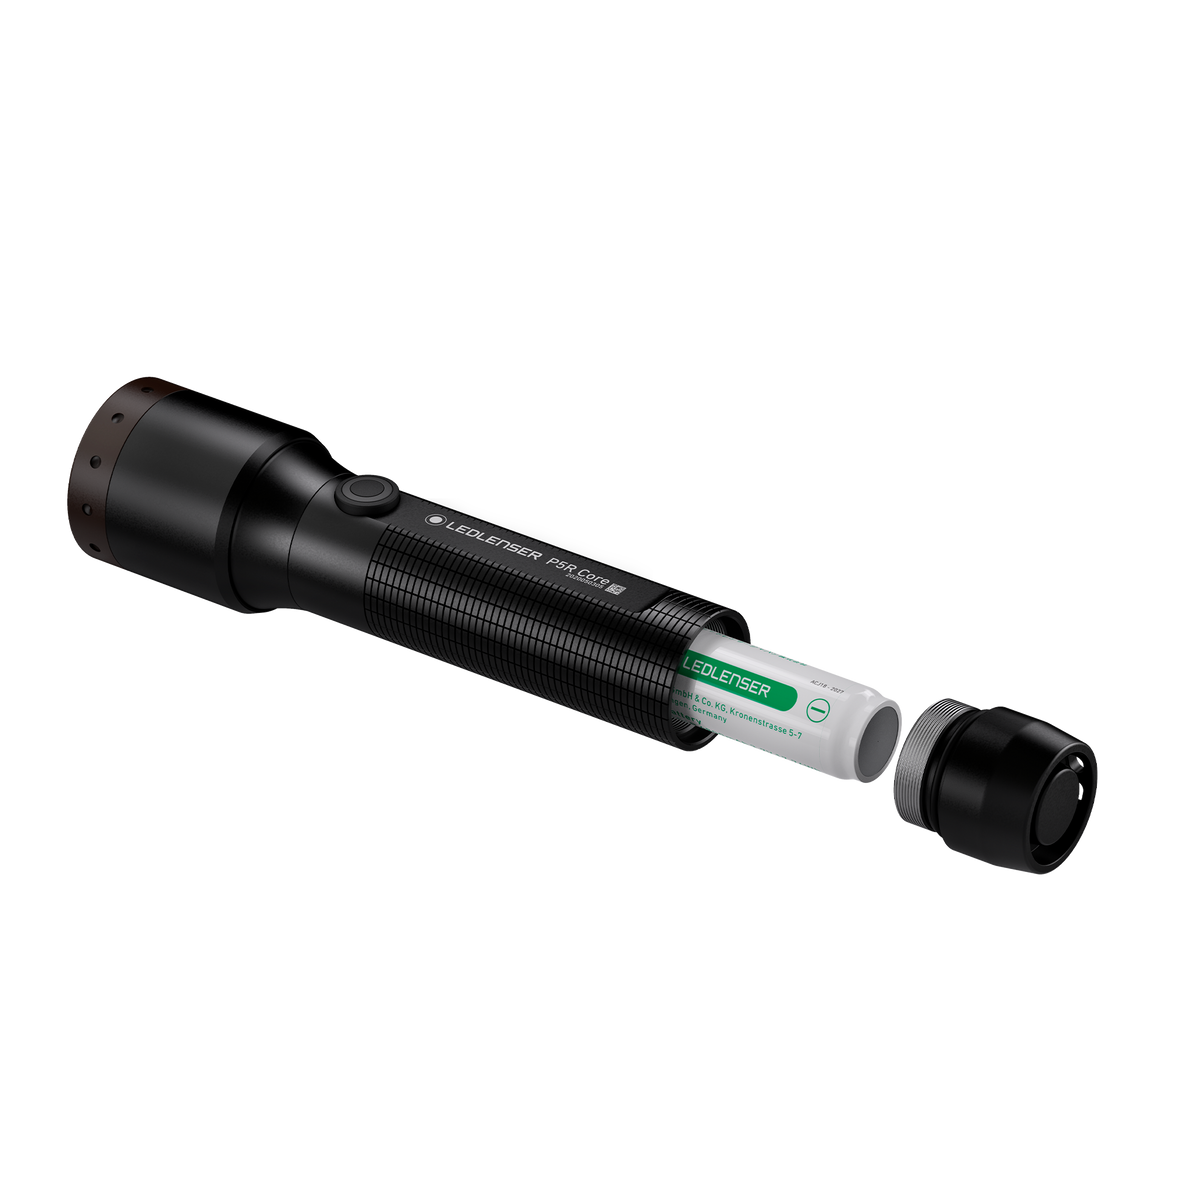 P5R Core Rechargeable LED Pocket Torch | LedLenser UK